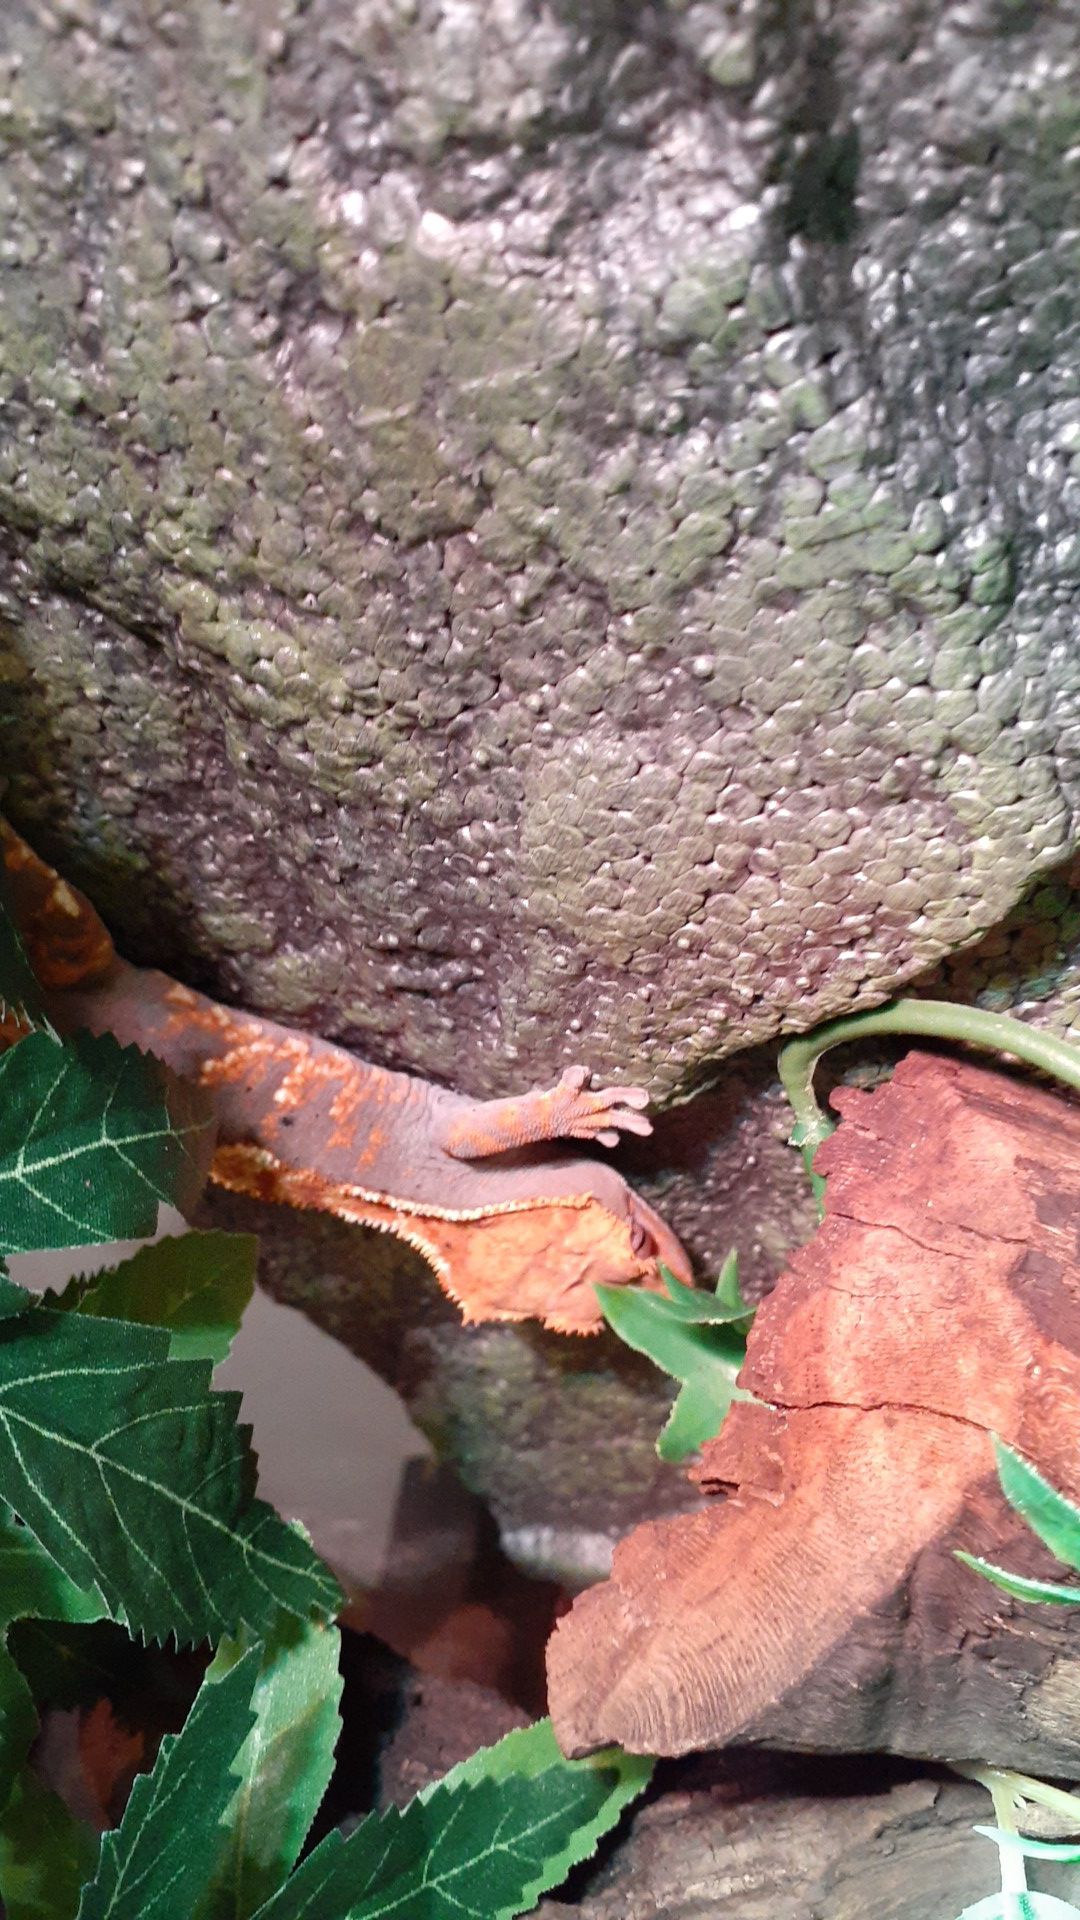 Crested gecko enclosure!!